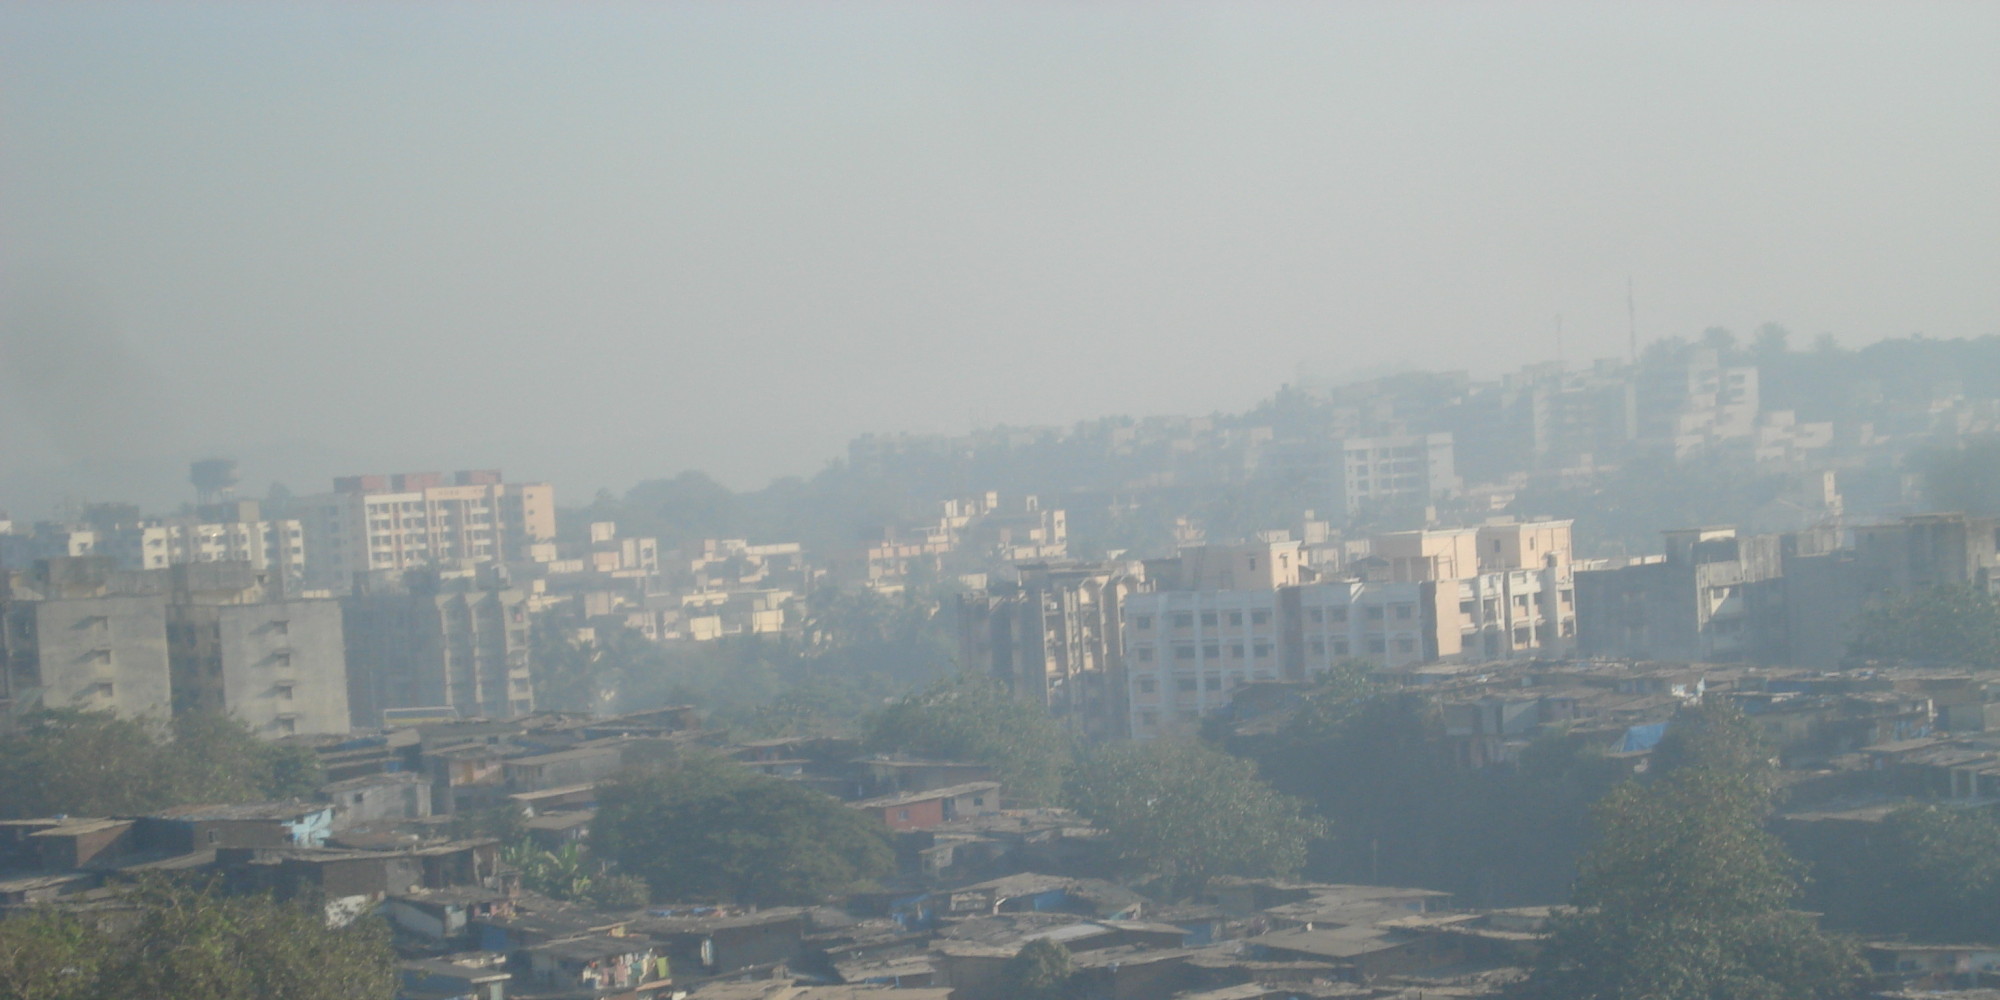 https://getrevising.co.uk/https_proxy/37812 (http://w.ndtvimg.com/sites/3/2016/01/14071320/Mumbai-pollution-facebook.jpg)